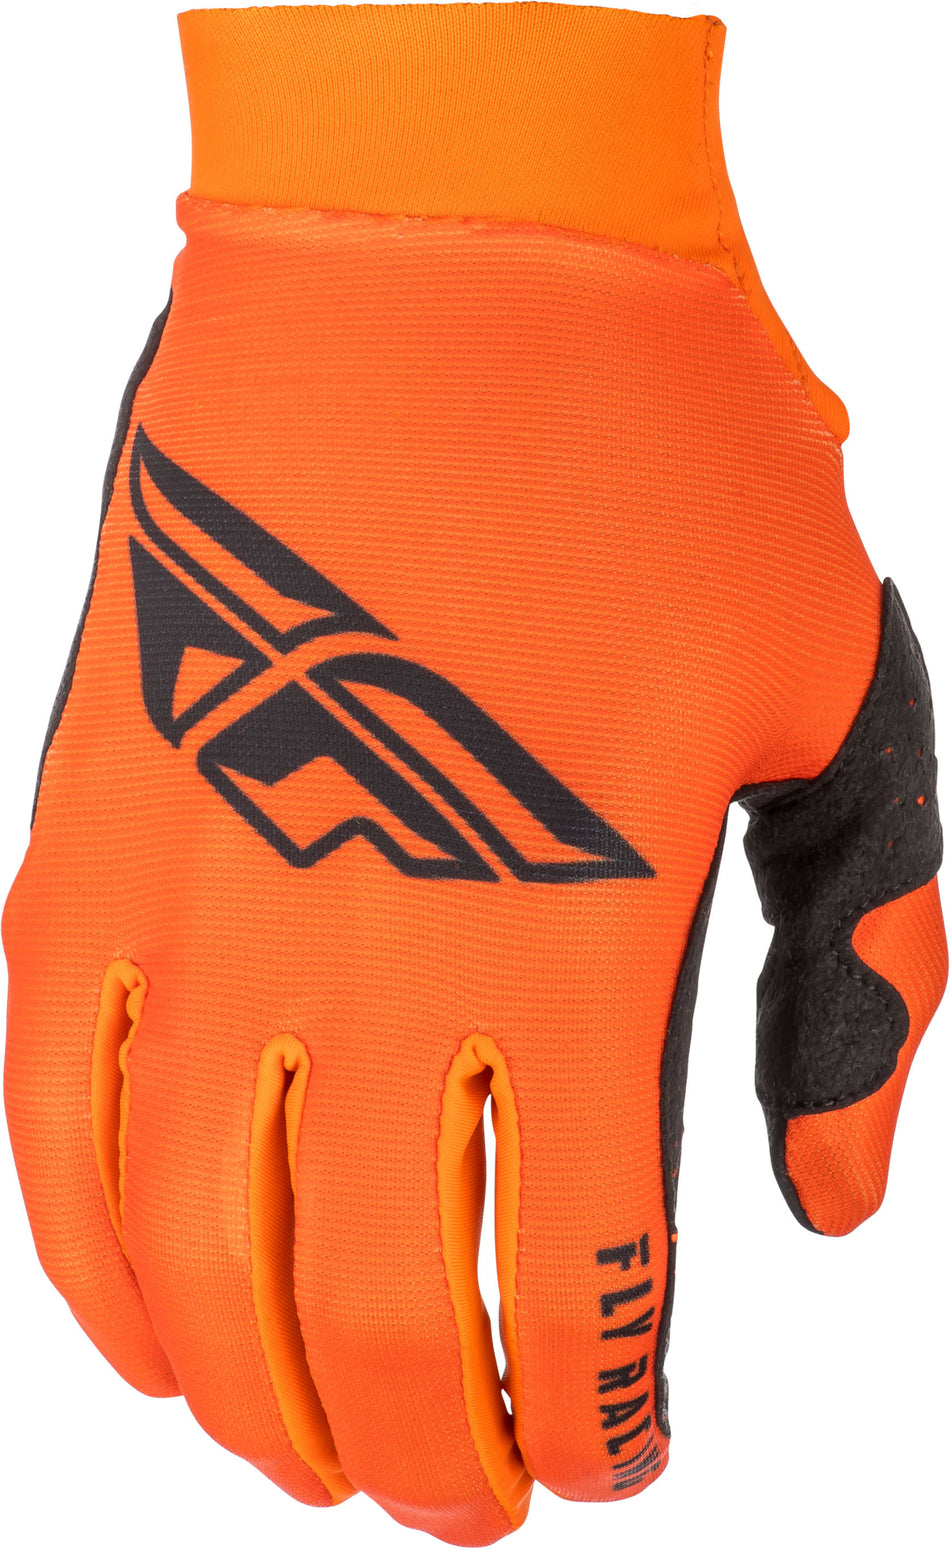 FLY RACING Pro Lite Gloves Orange/Black Sz 08 372-81708